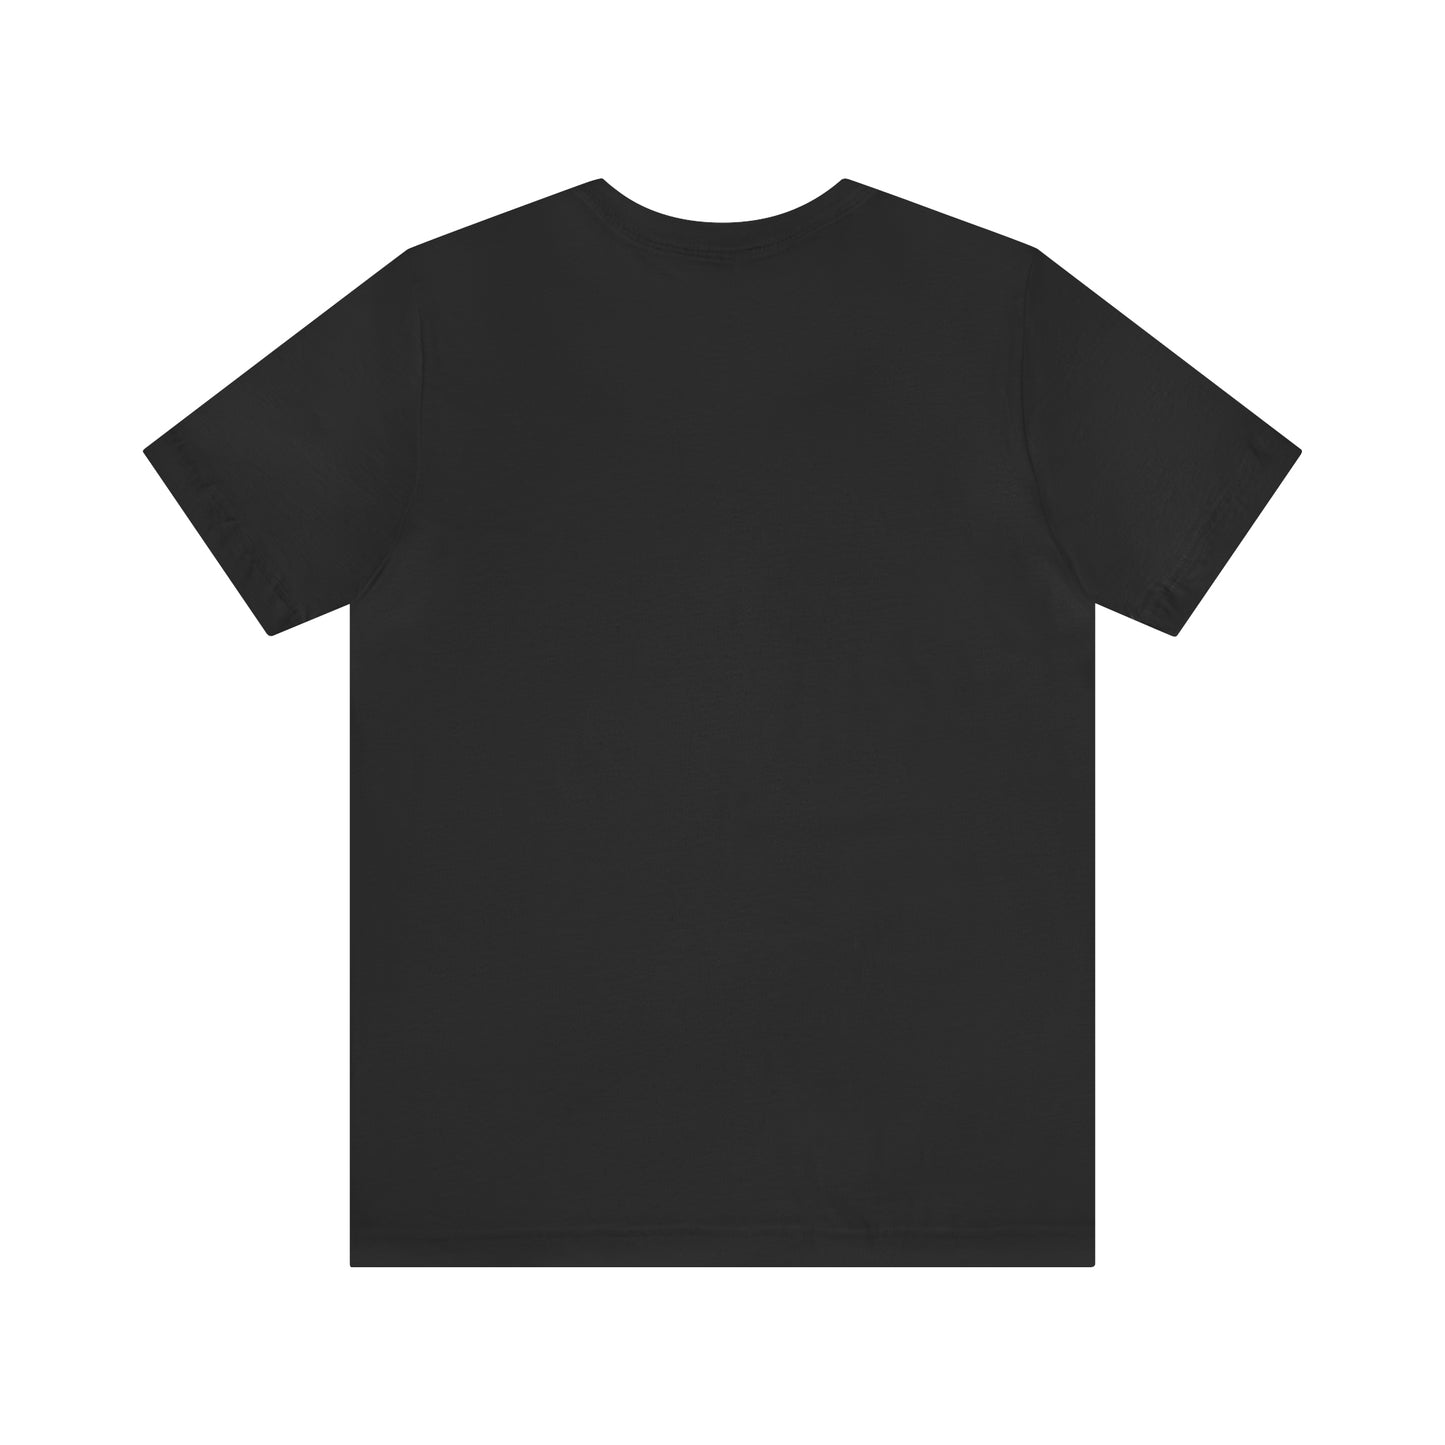 Stylish Scribe Black T-Shirt